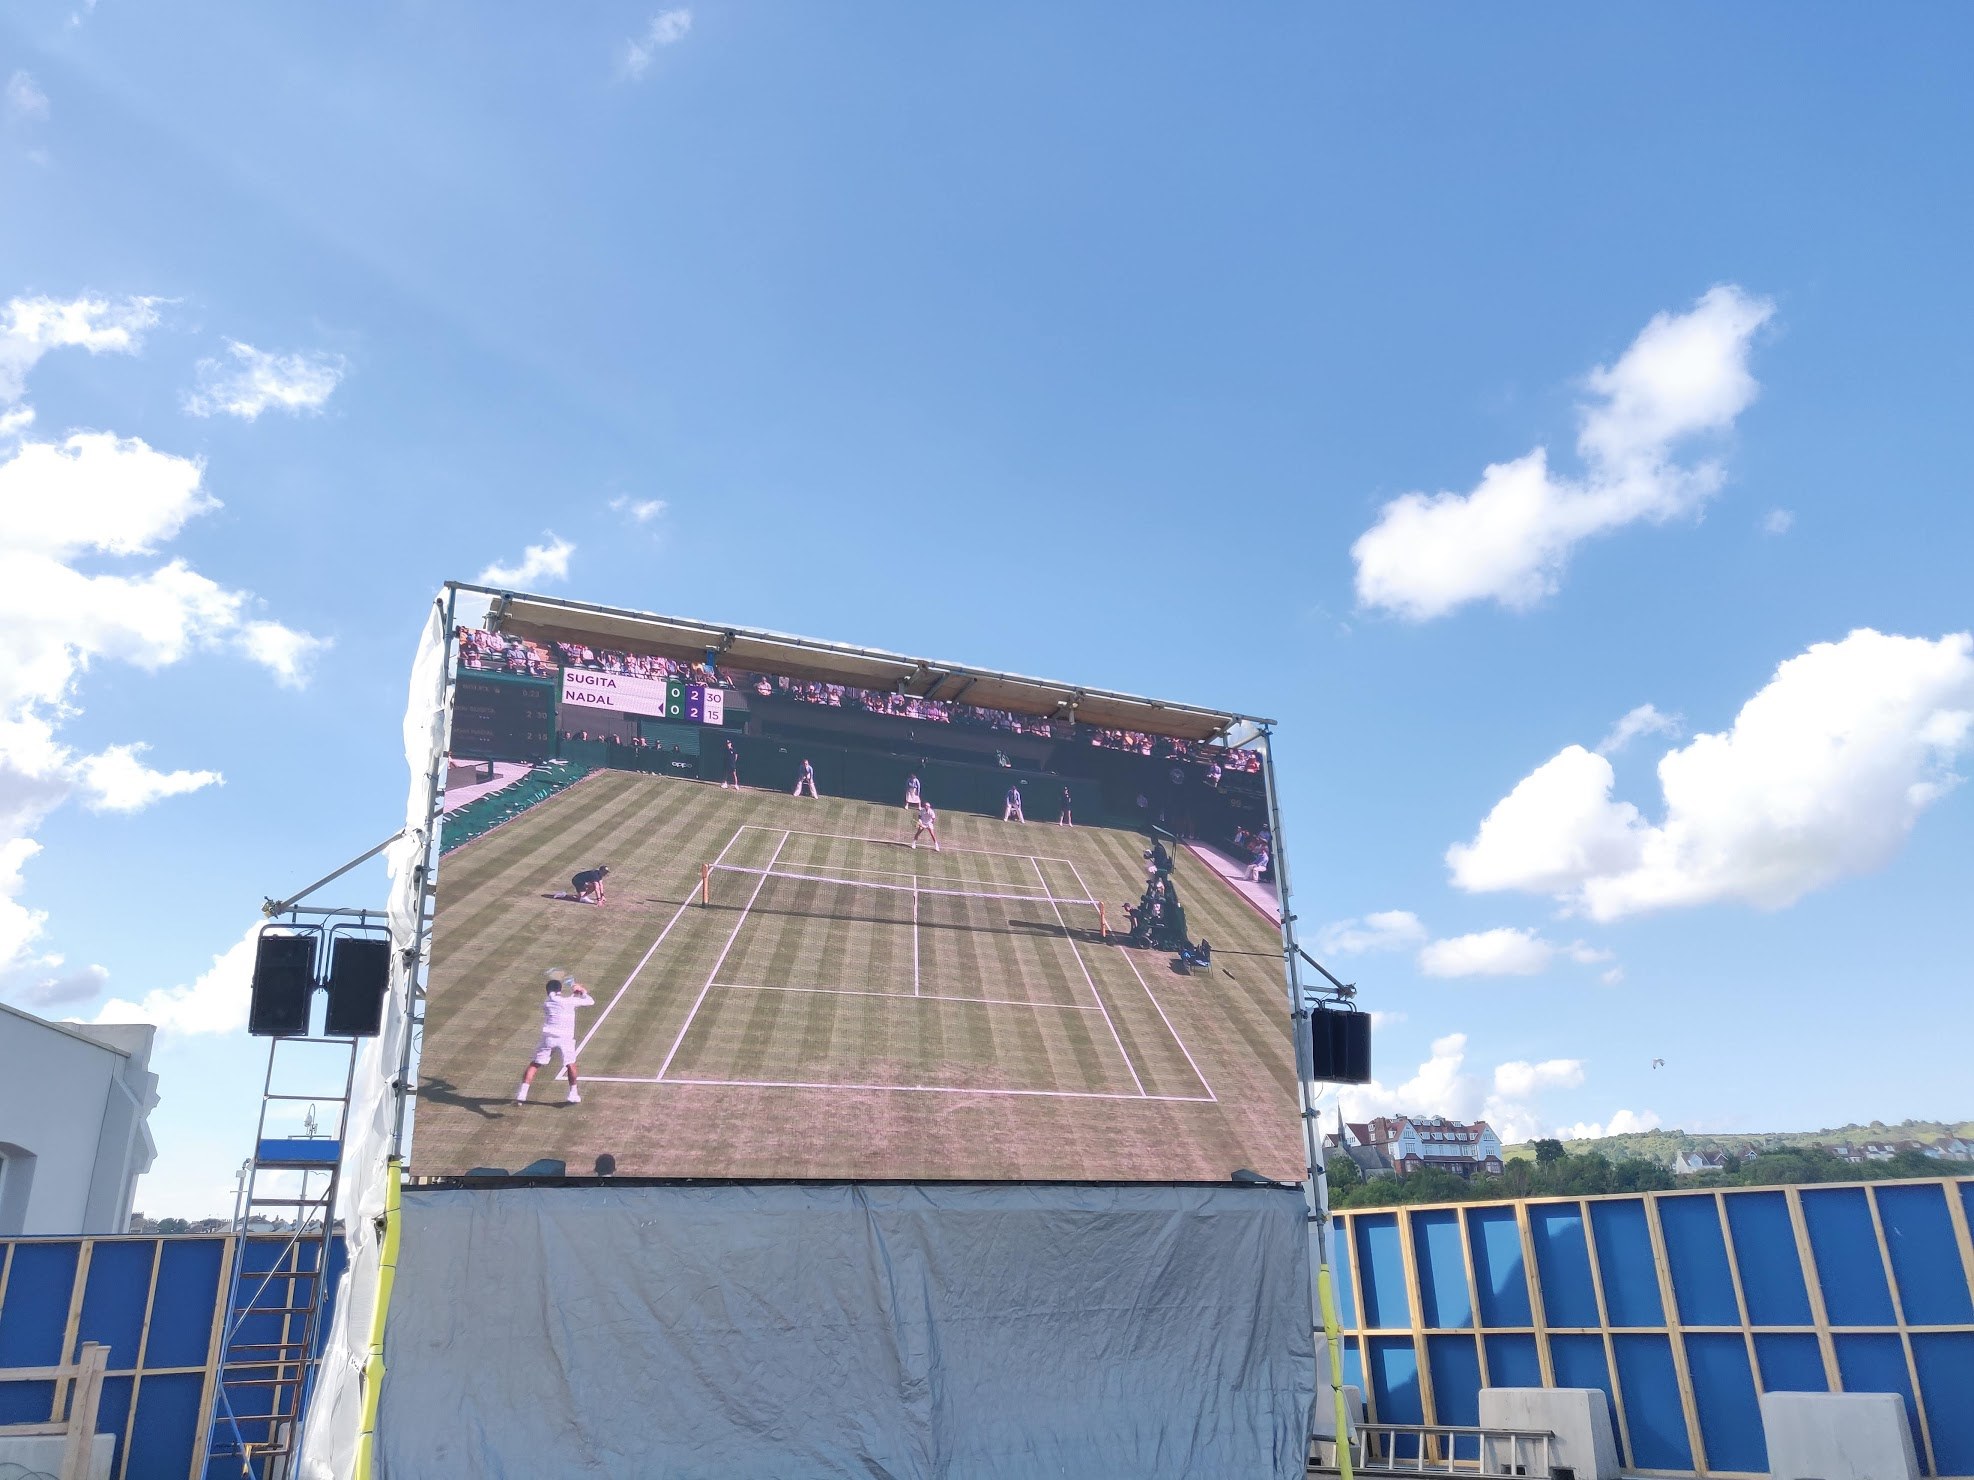 Tennis on the Big Screen